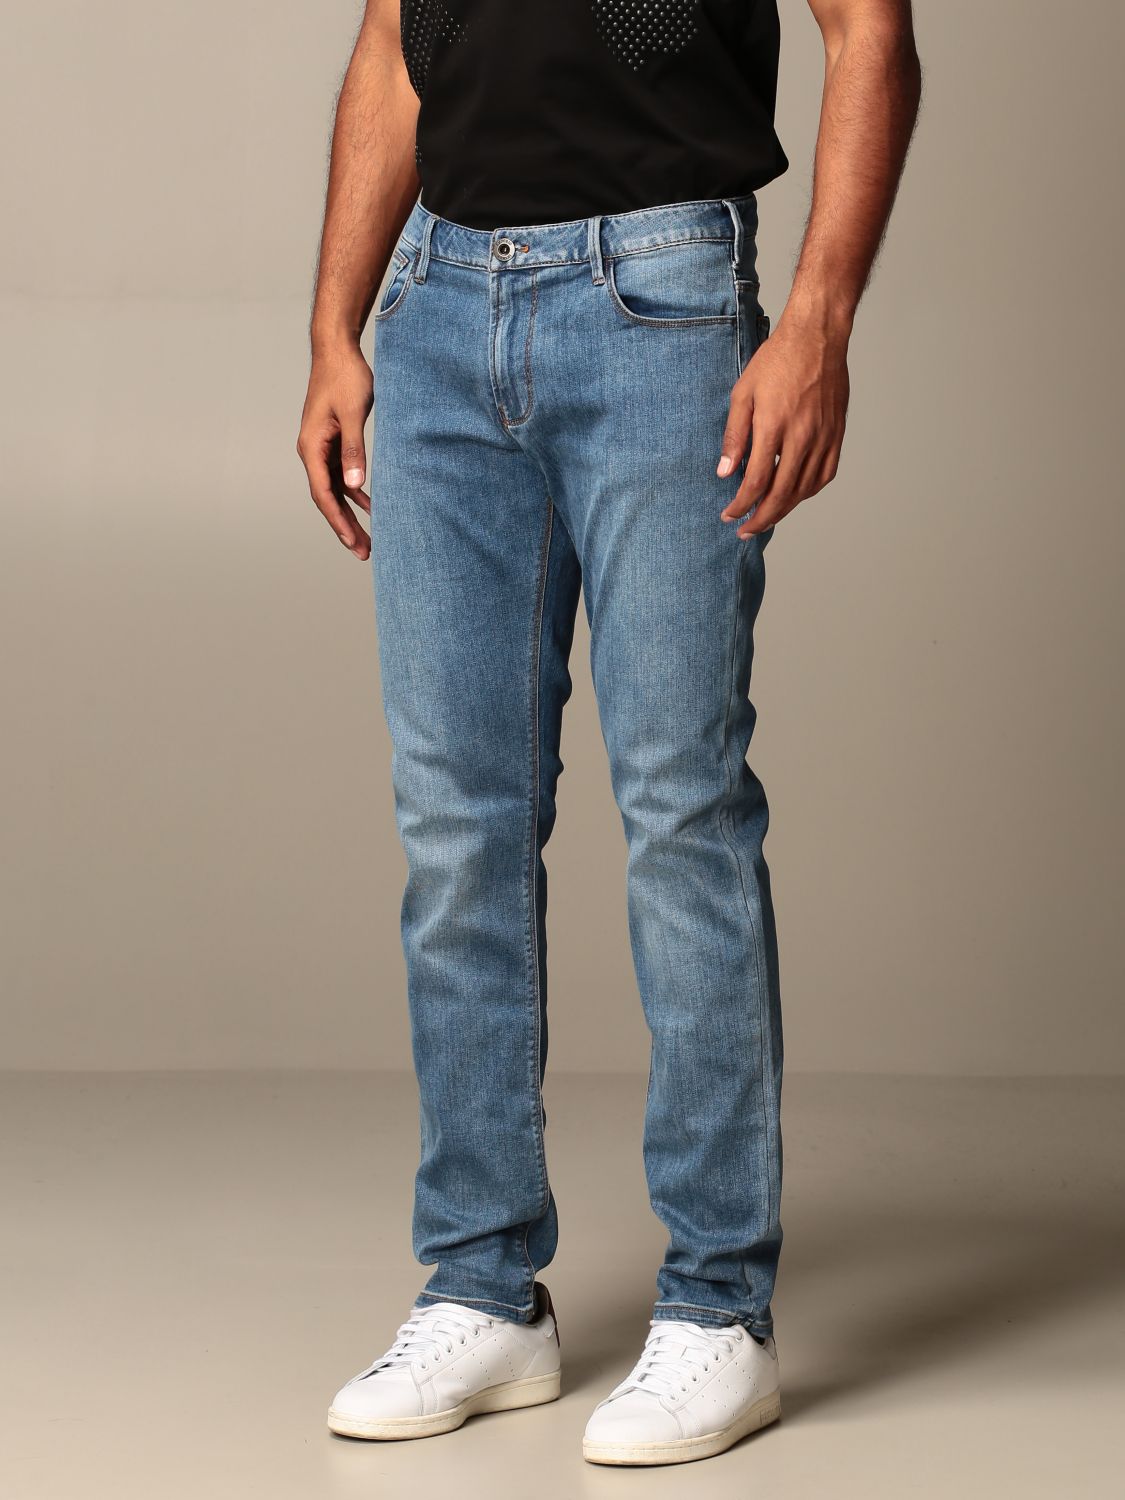 giorgio armani jeans